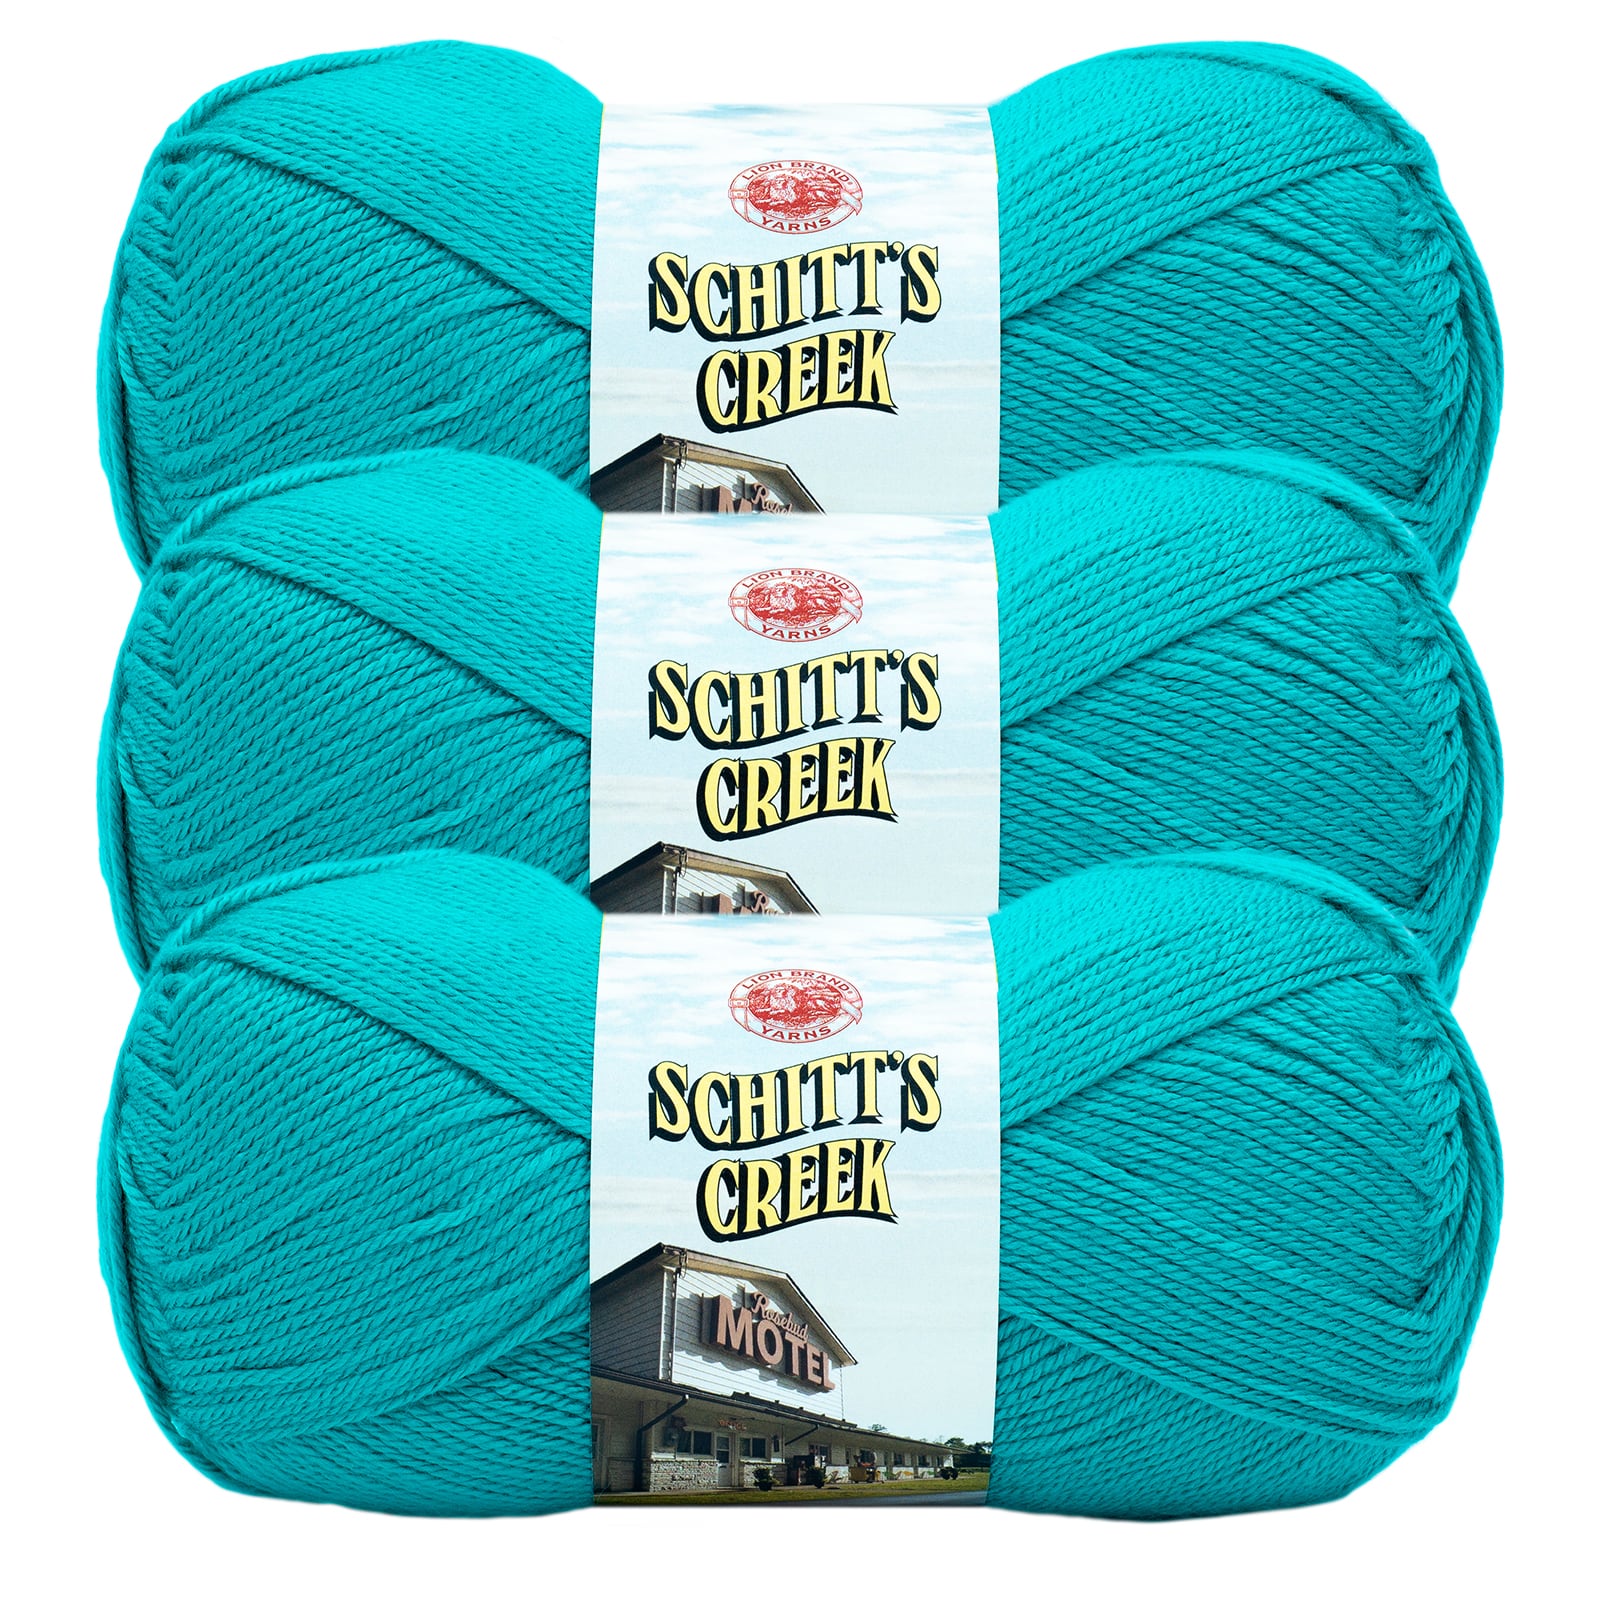 Hobby Lobby I Love This Yarn! Medium Acrylic - Soft Blue - 7oz Skein